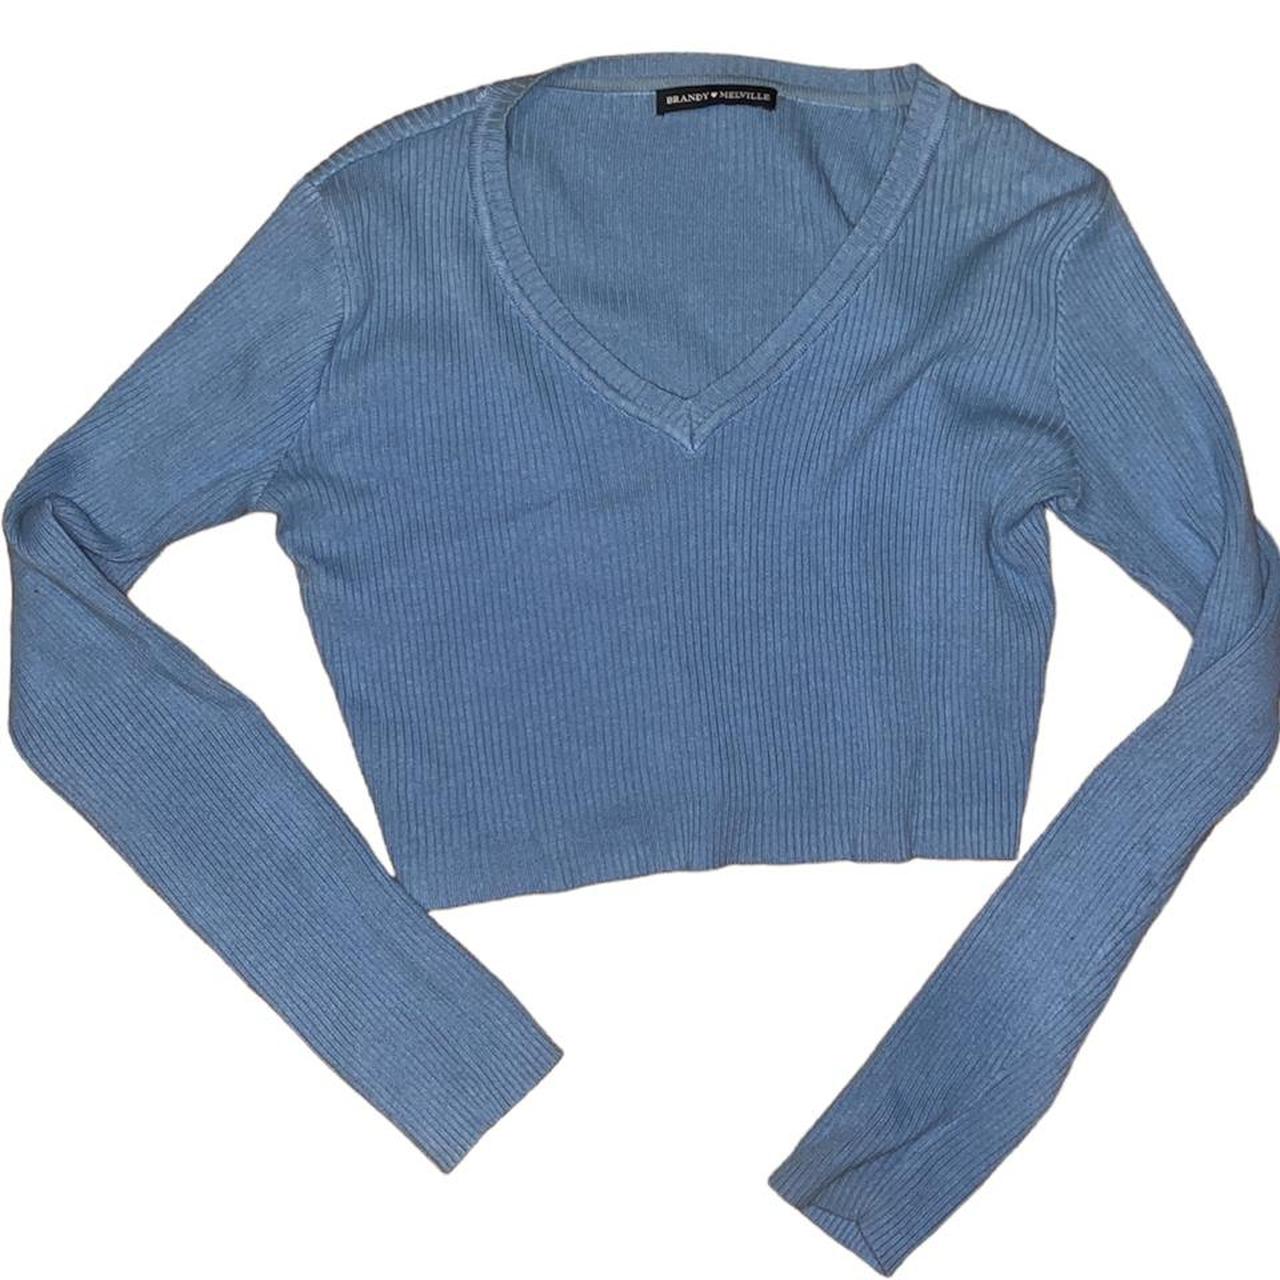 Brandy Melville Cropped Light Blue Long Sleeve Sweater